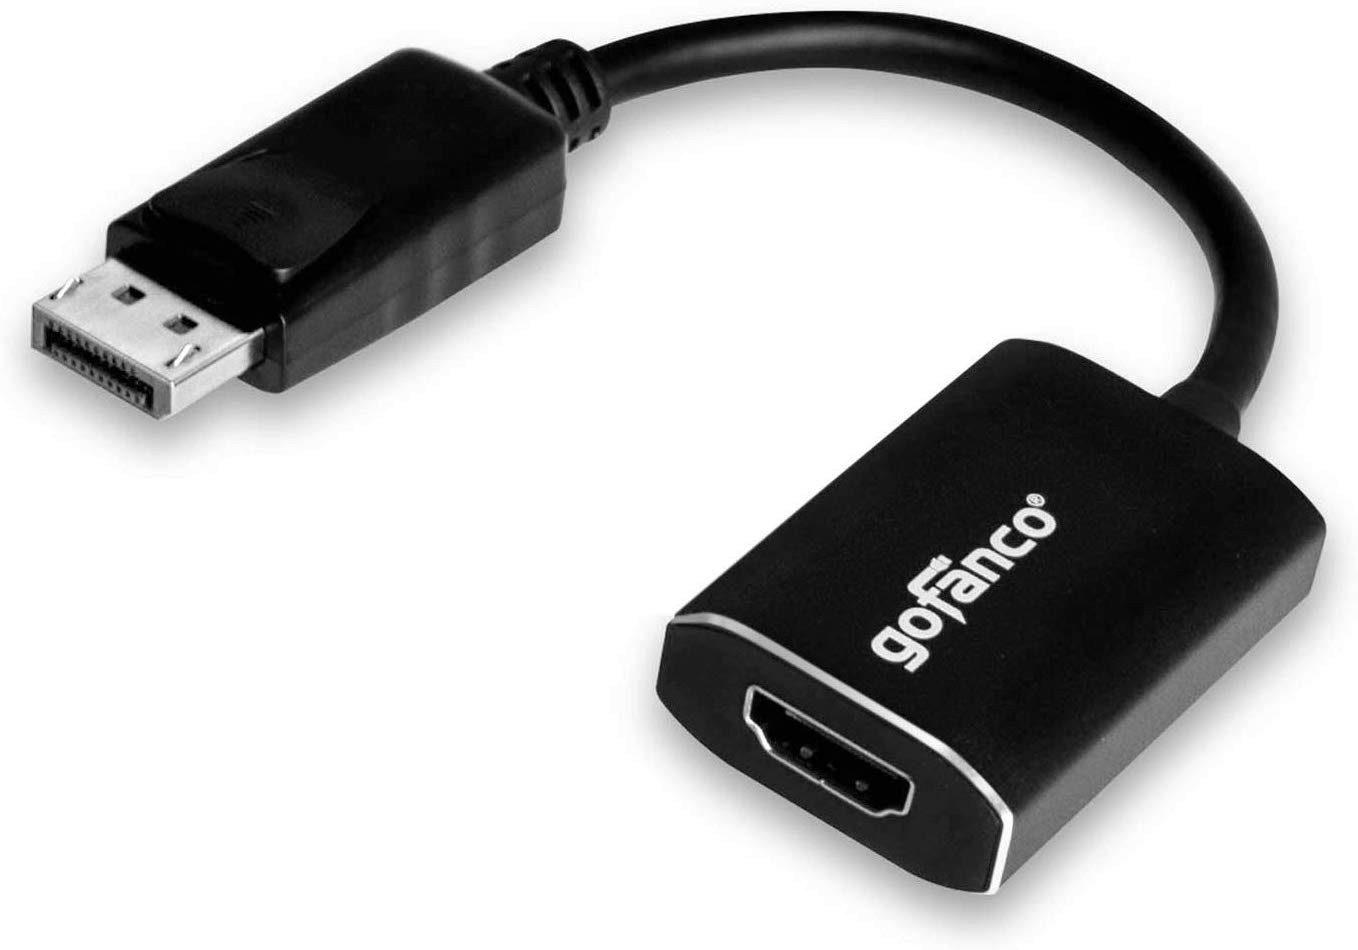 HDMI 2.0 to DisplayPort 1.2 Adapter – AvicoTech